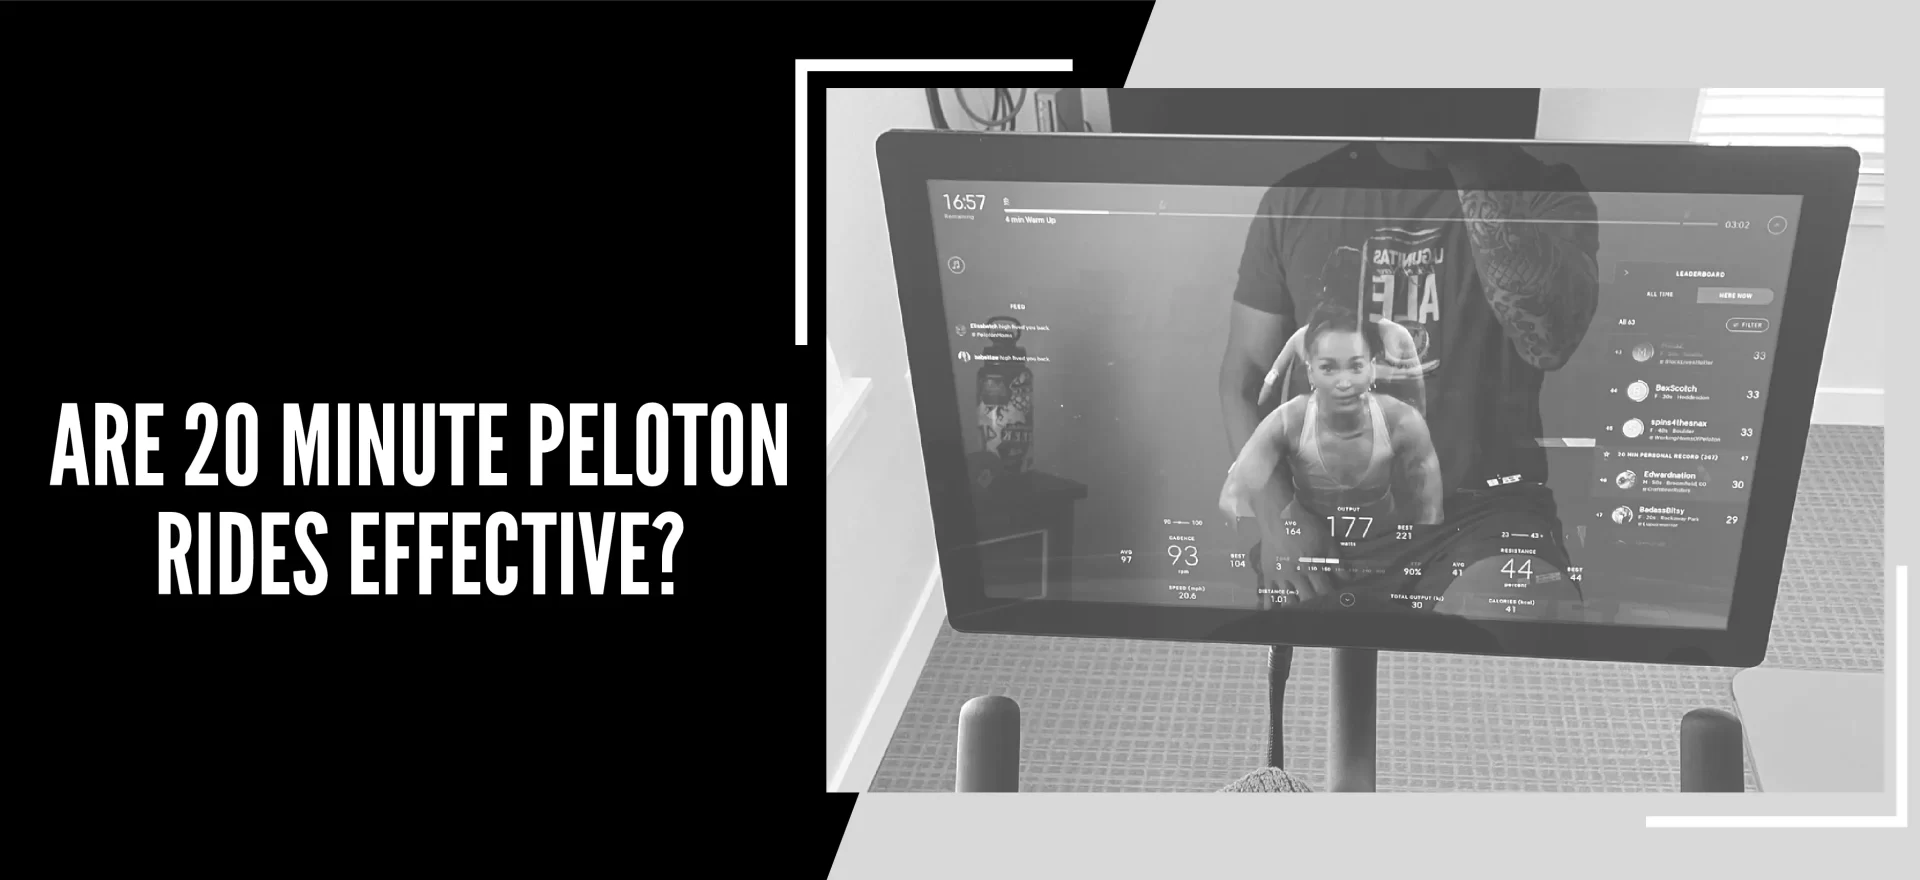 Are 20 Minute Peloton Rides Effective?